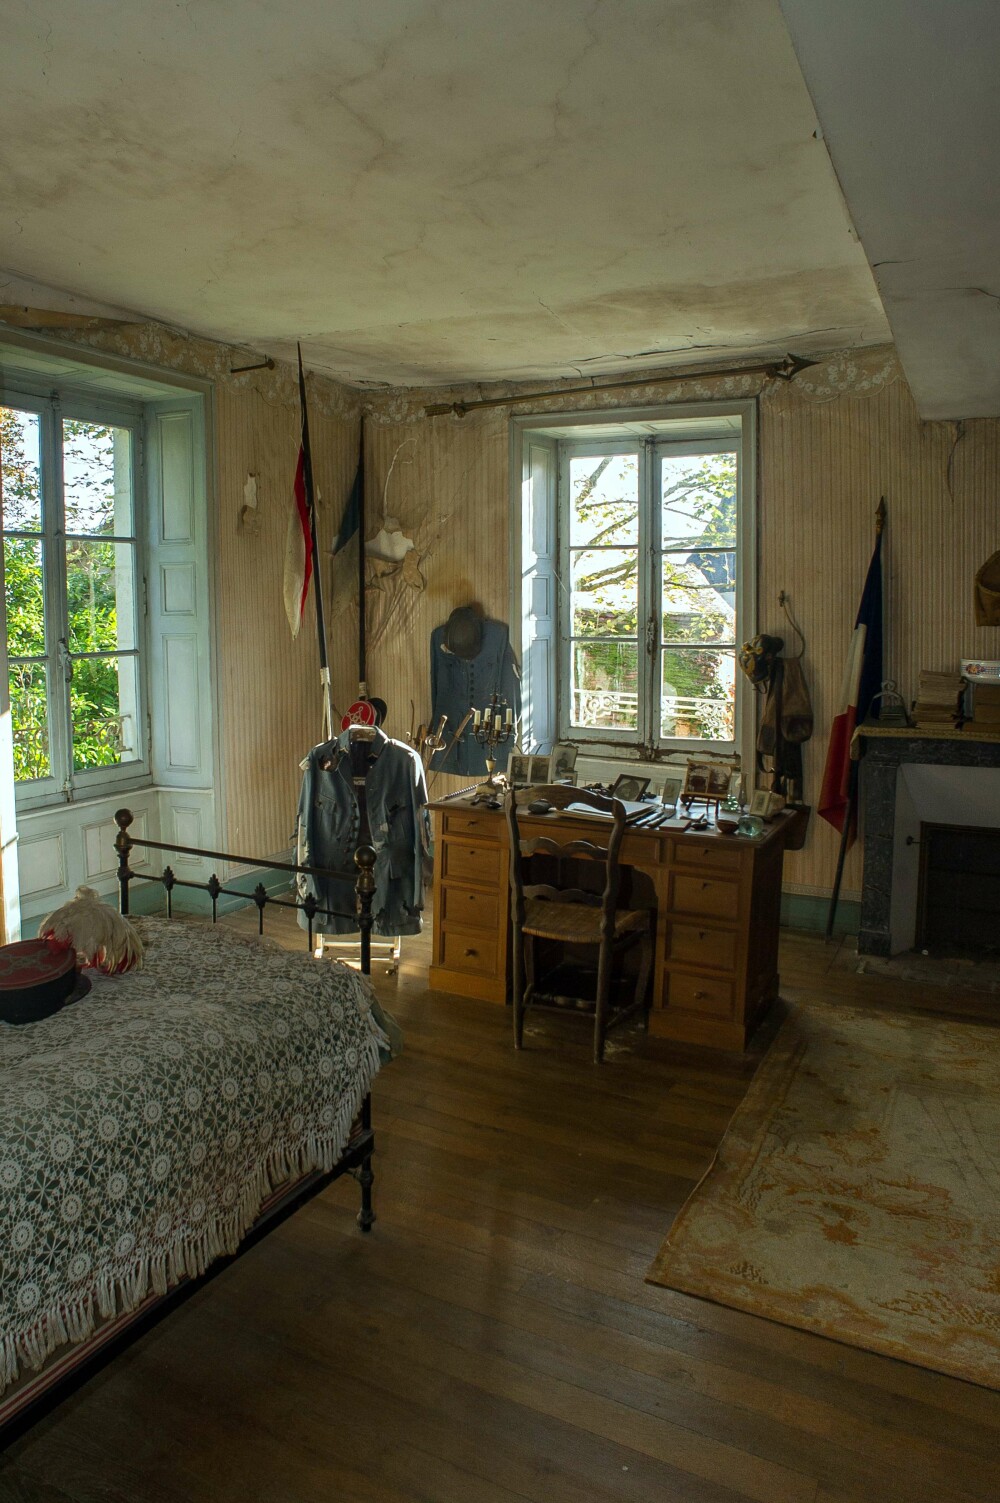 Incursiune in istorie. Cum arata camera unui soldat din Primul Razboi Mondial, nemodificata de 100 de ani - Imaginea 4